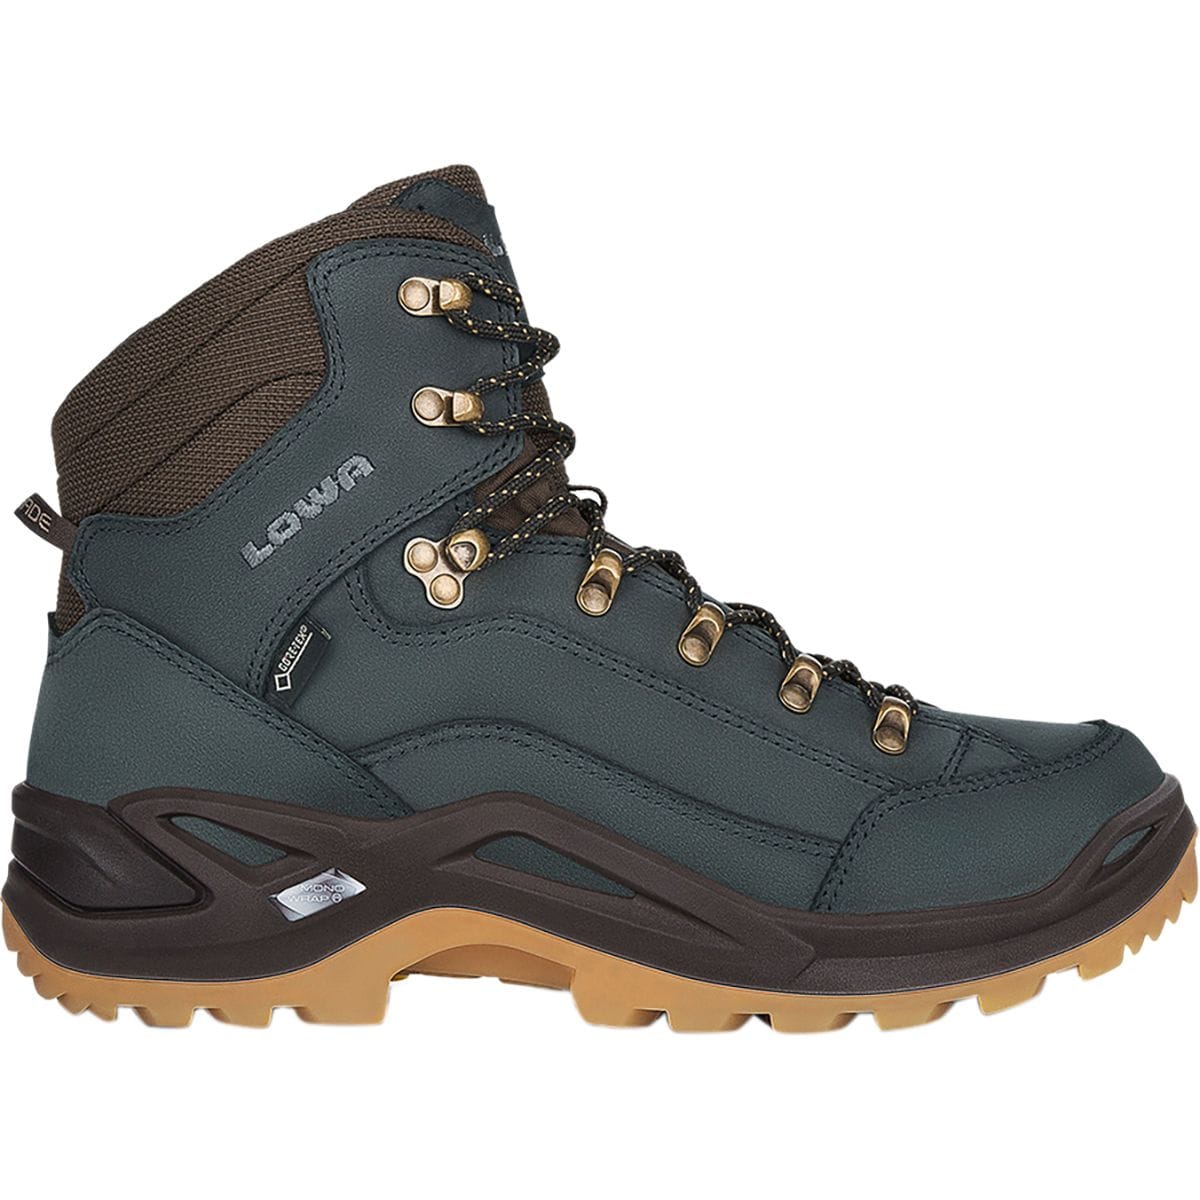 Renegade GTX Mid Hiking Boot - Men